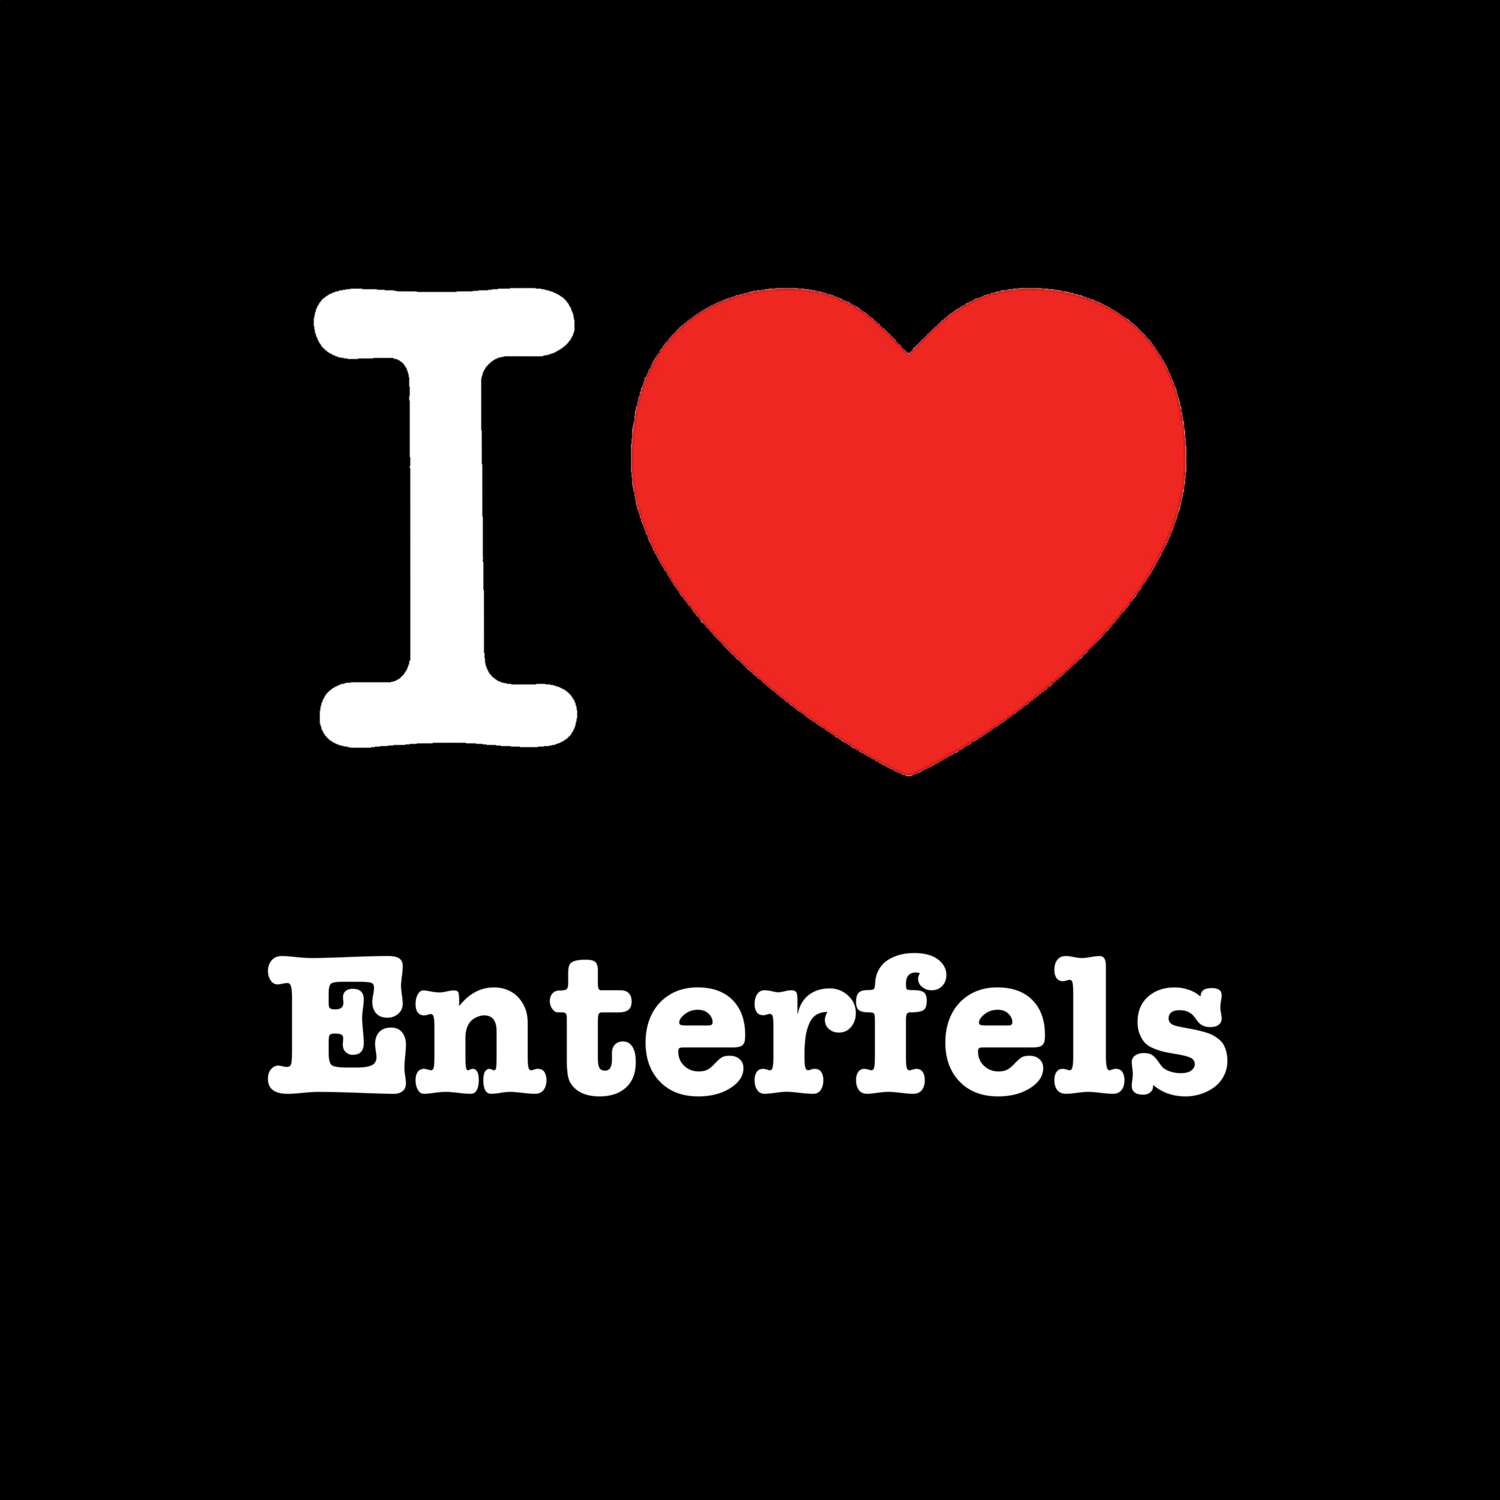 Enterfels T-Shirt »I love«